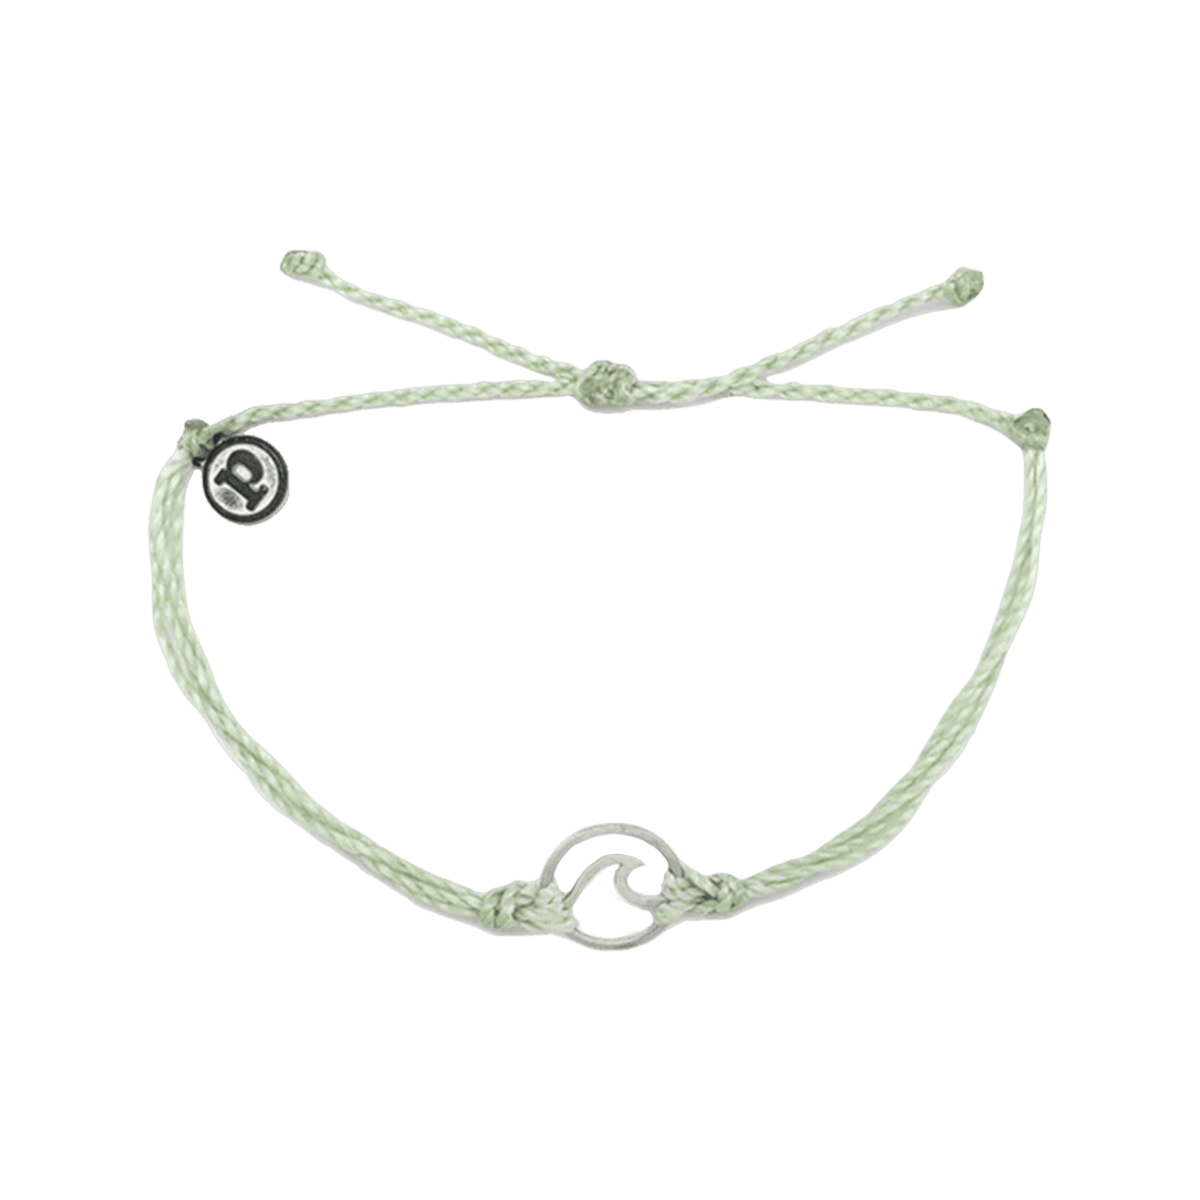 Pura Vida Silver Wave Bracelet in Minty Green - BoardCo